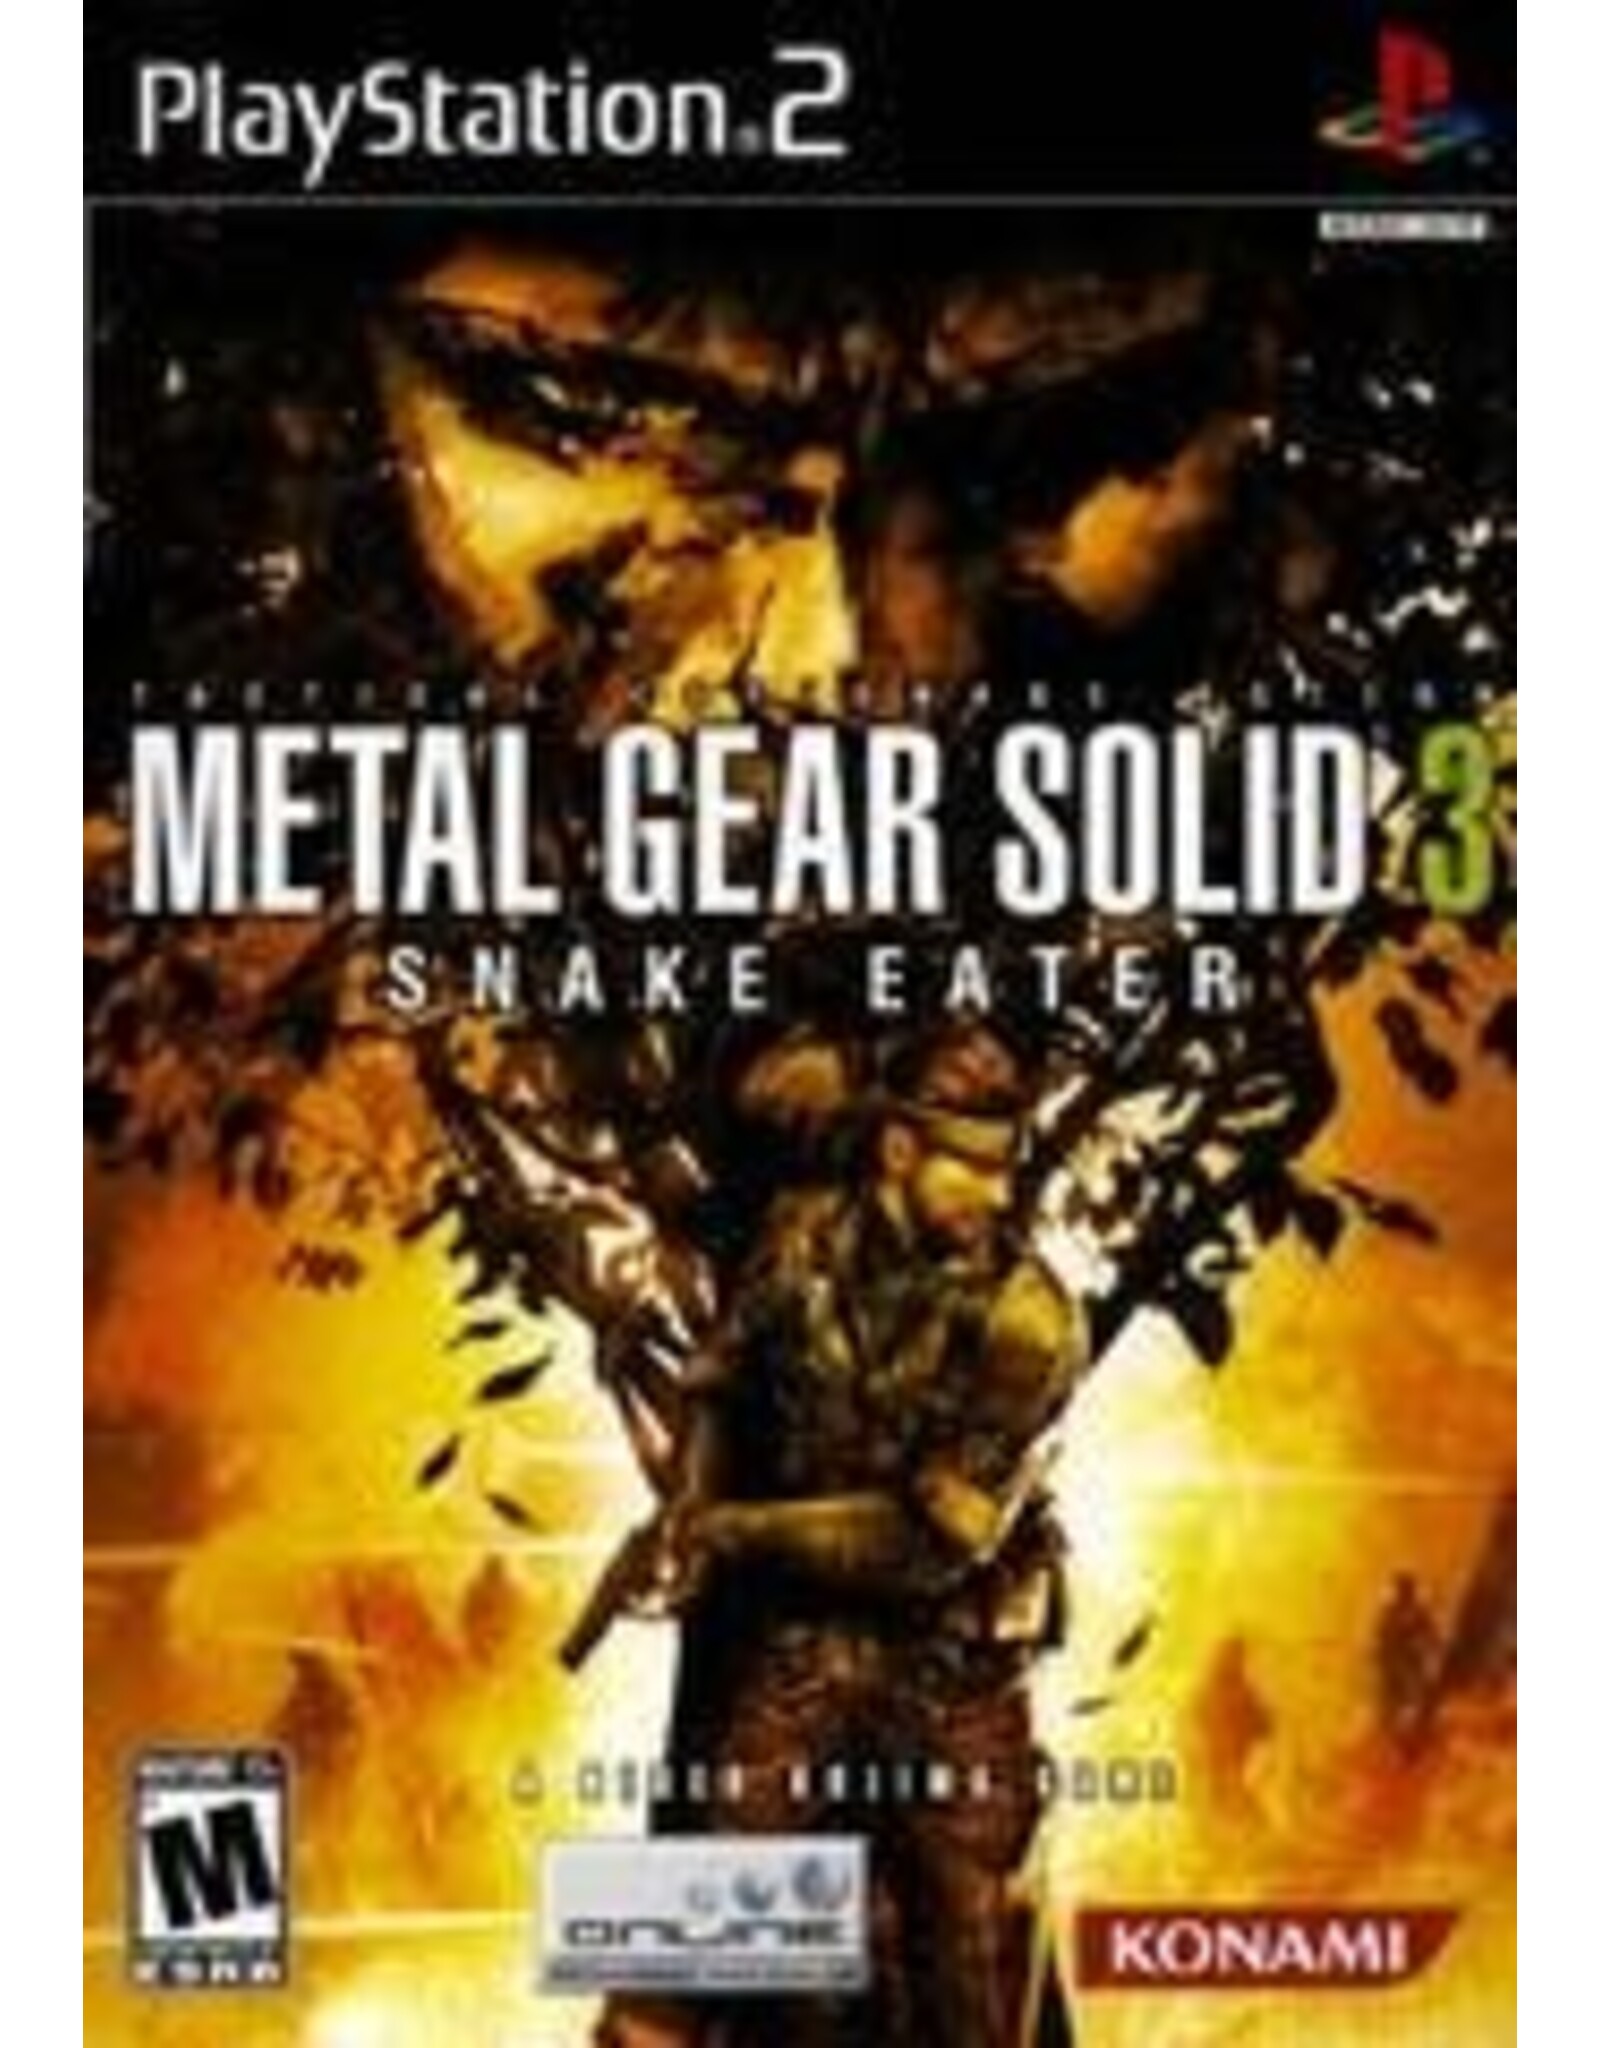 Playstation 2 Metal Gear Solid 3 Snake Eater (No Manual)